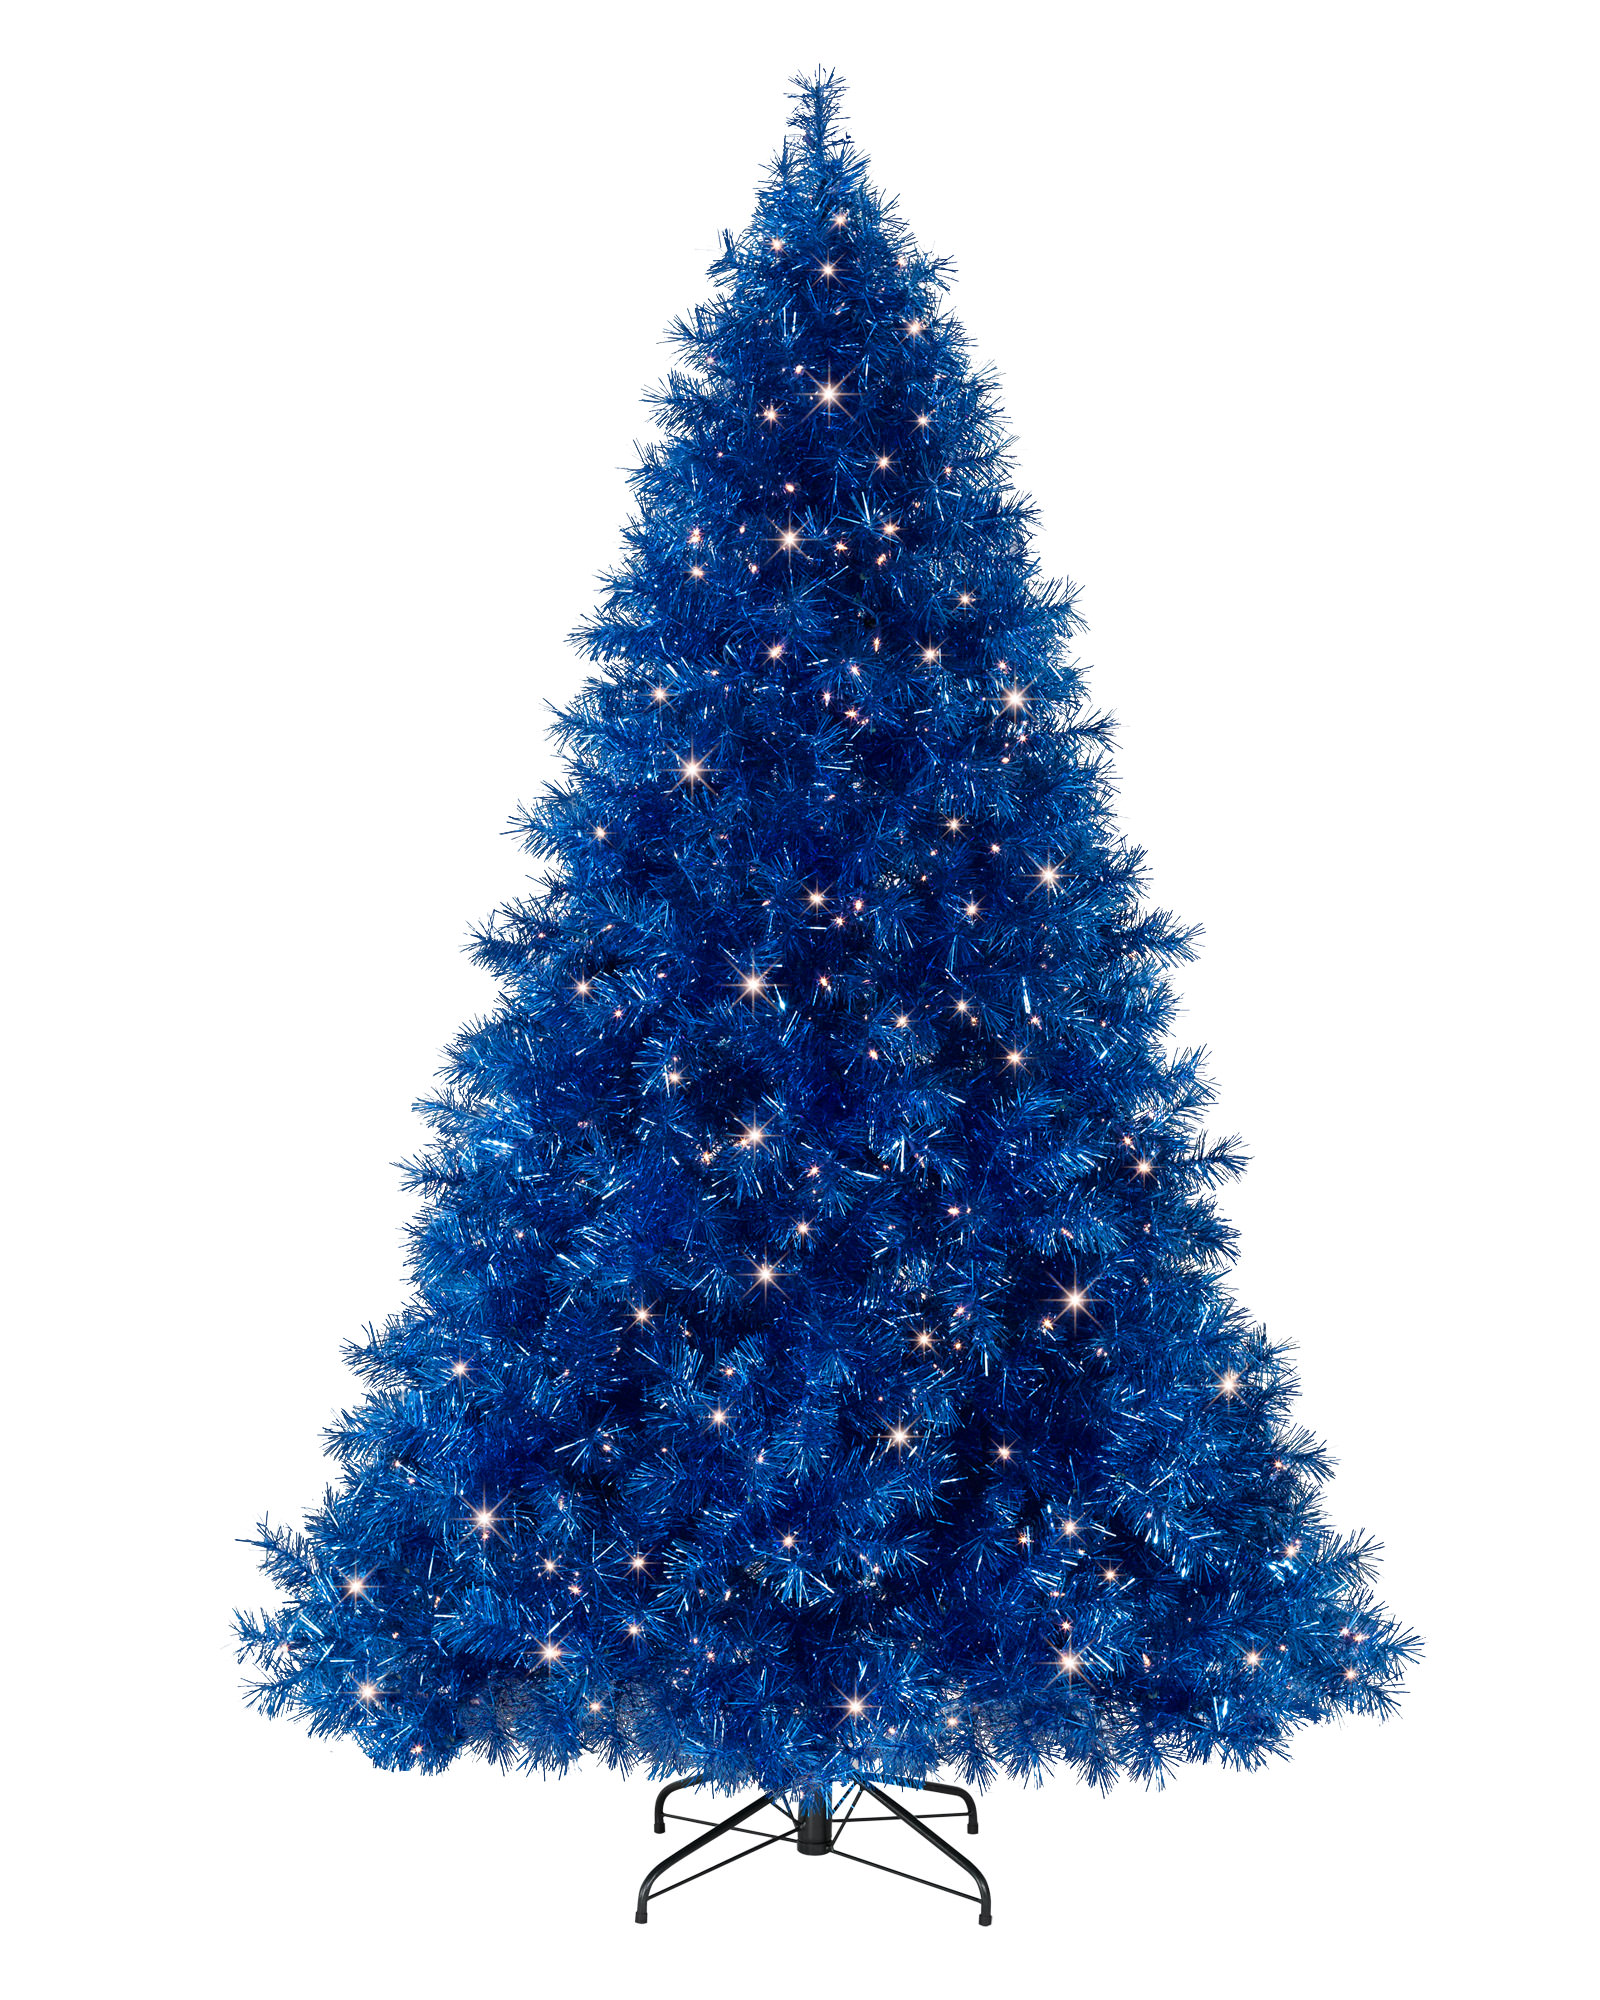 Blue Christmas Tree Clipart.